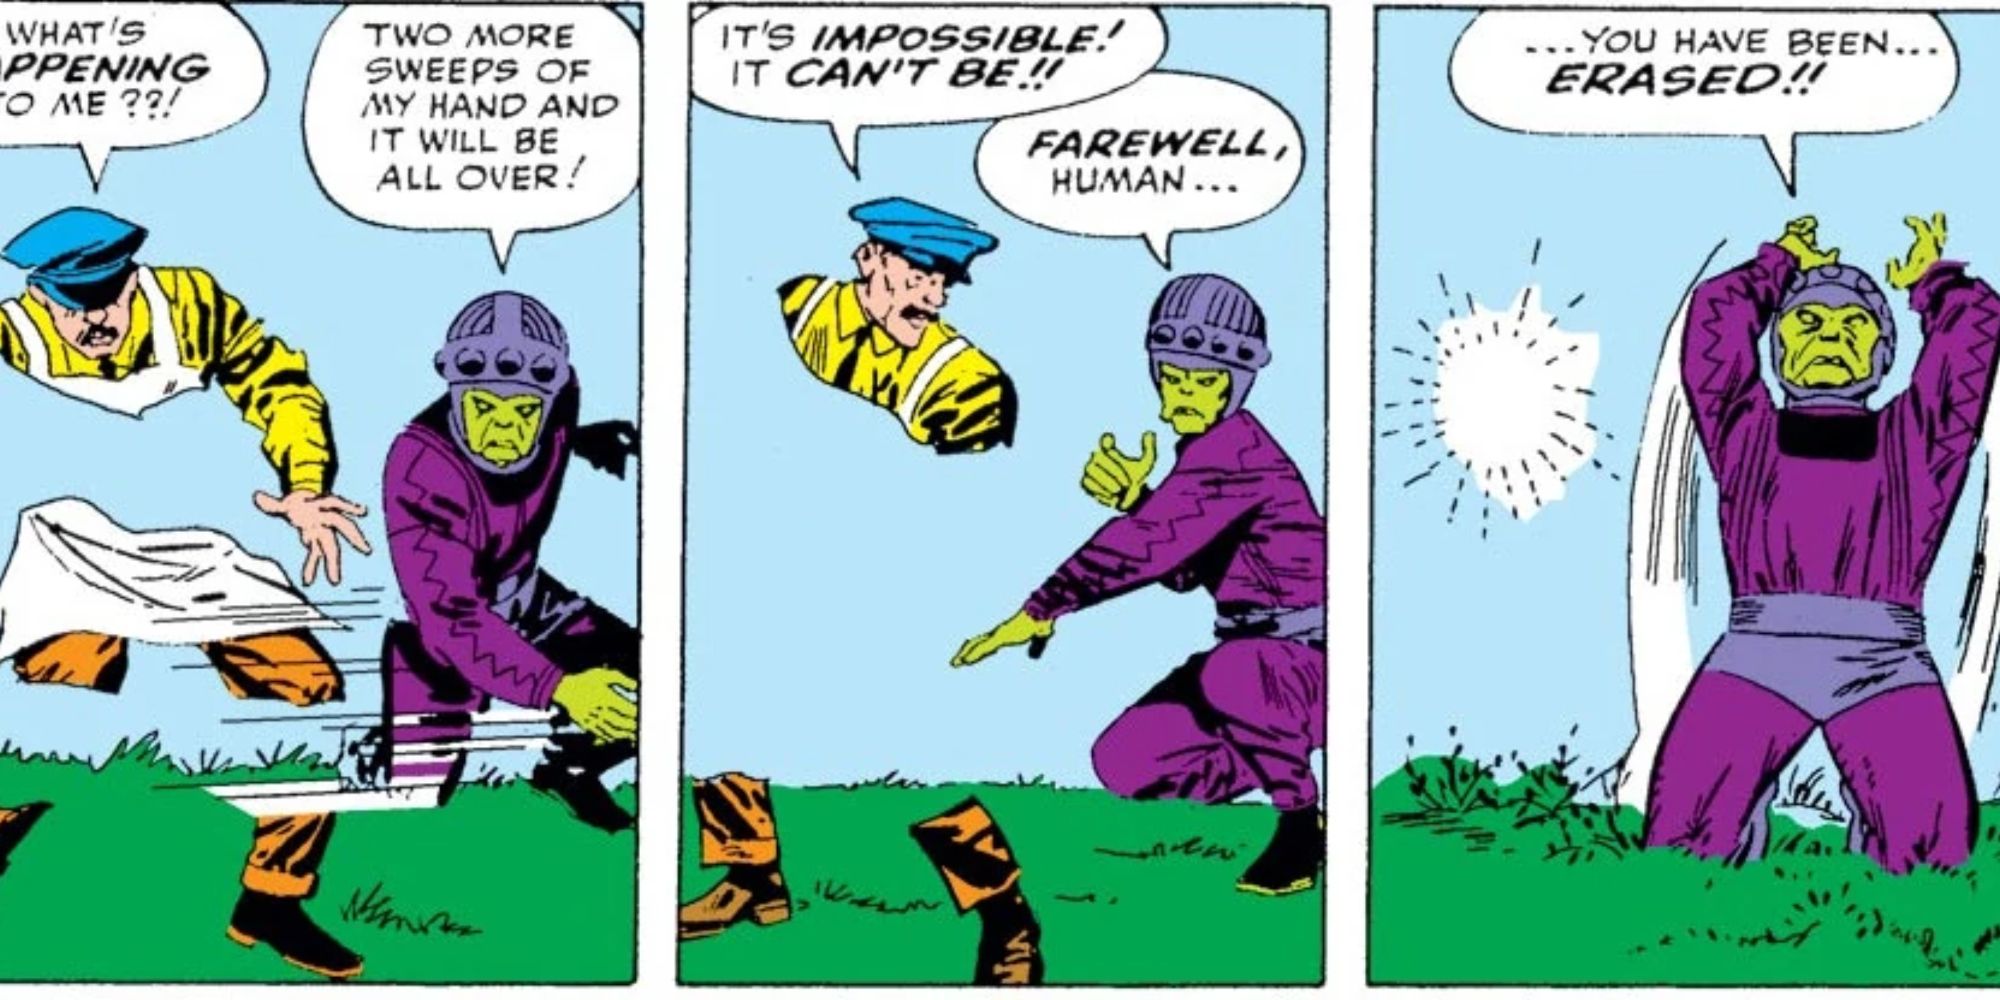 The Living Eraser erases a man in Marvel Comics.